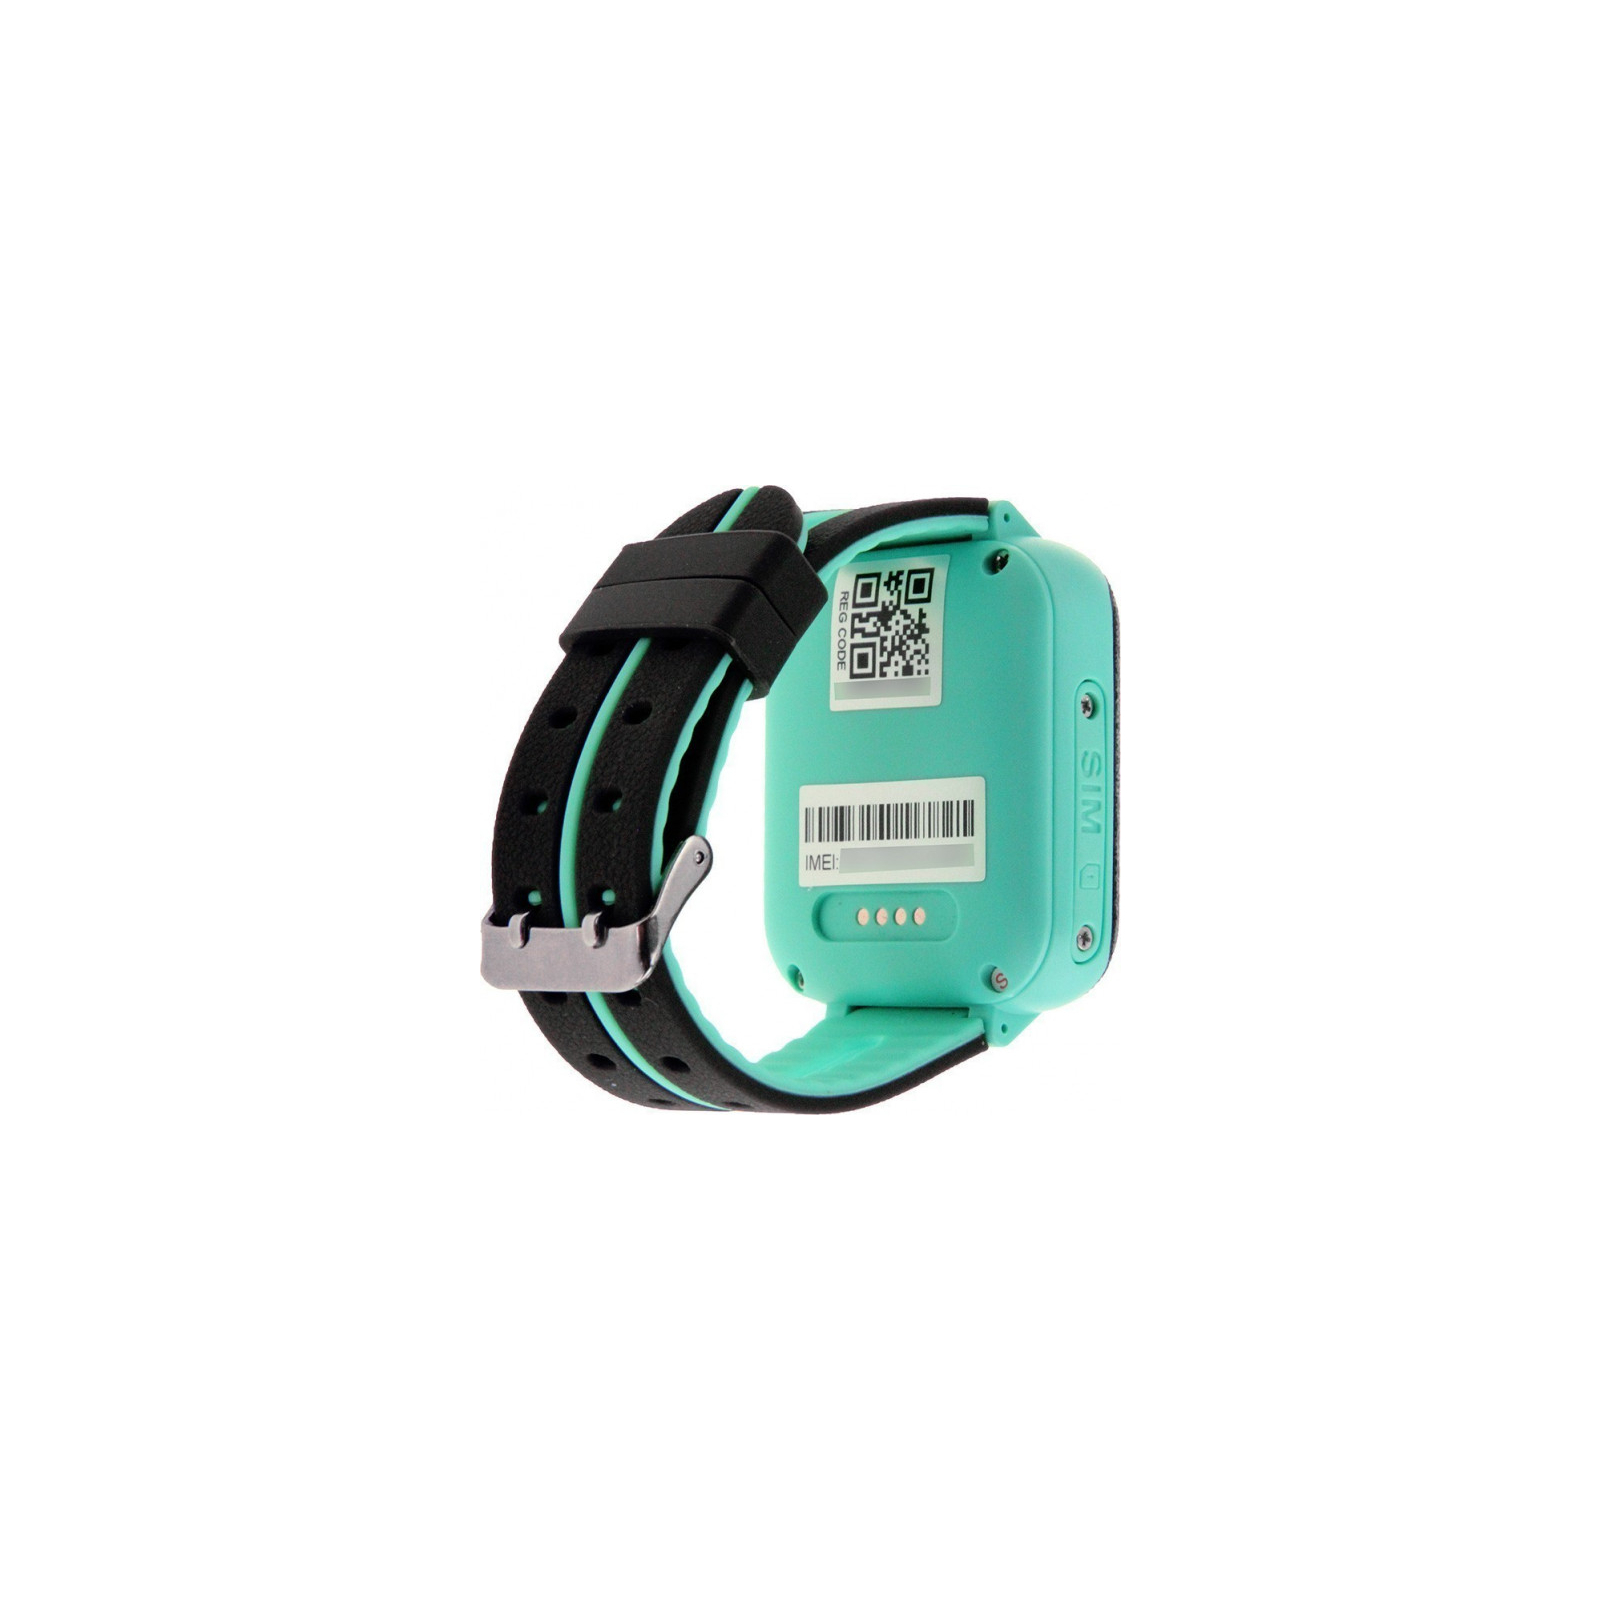 Смарт-часы UWatch S7 Kid smart watch Pink (F_87350) изображение 3